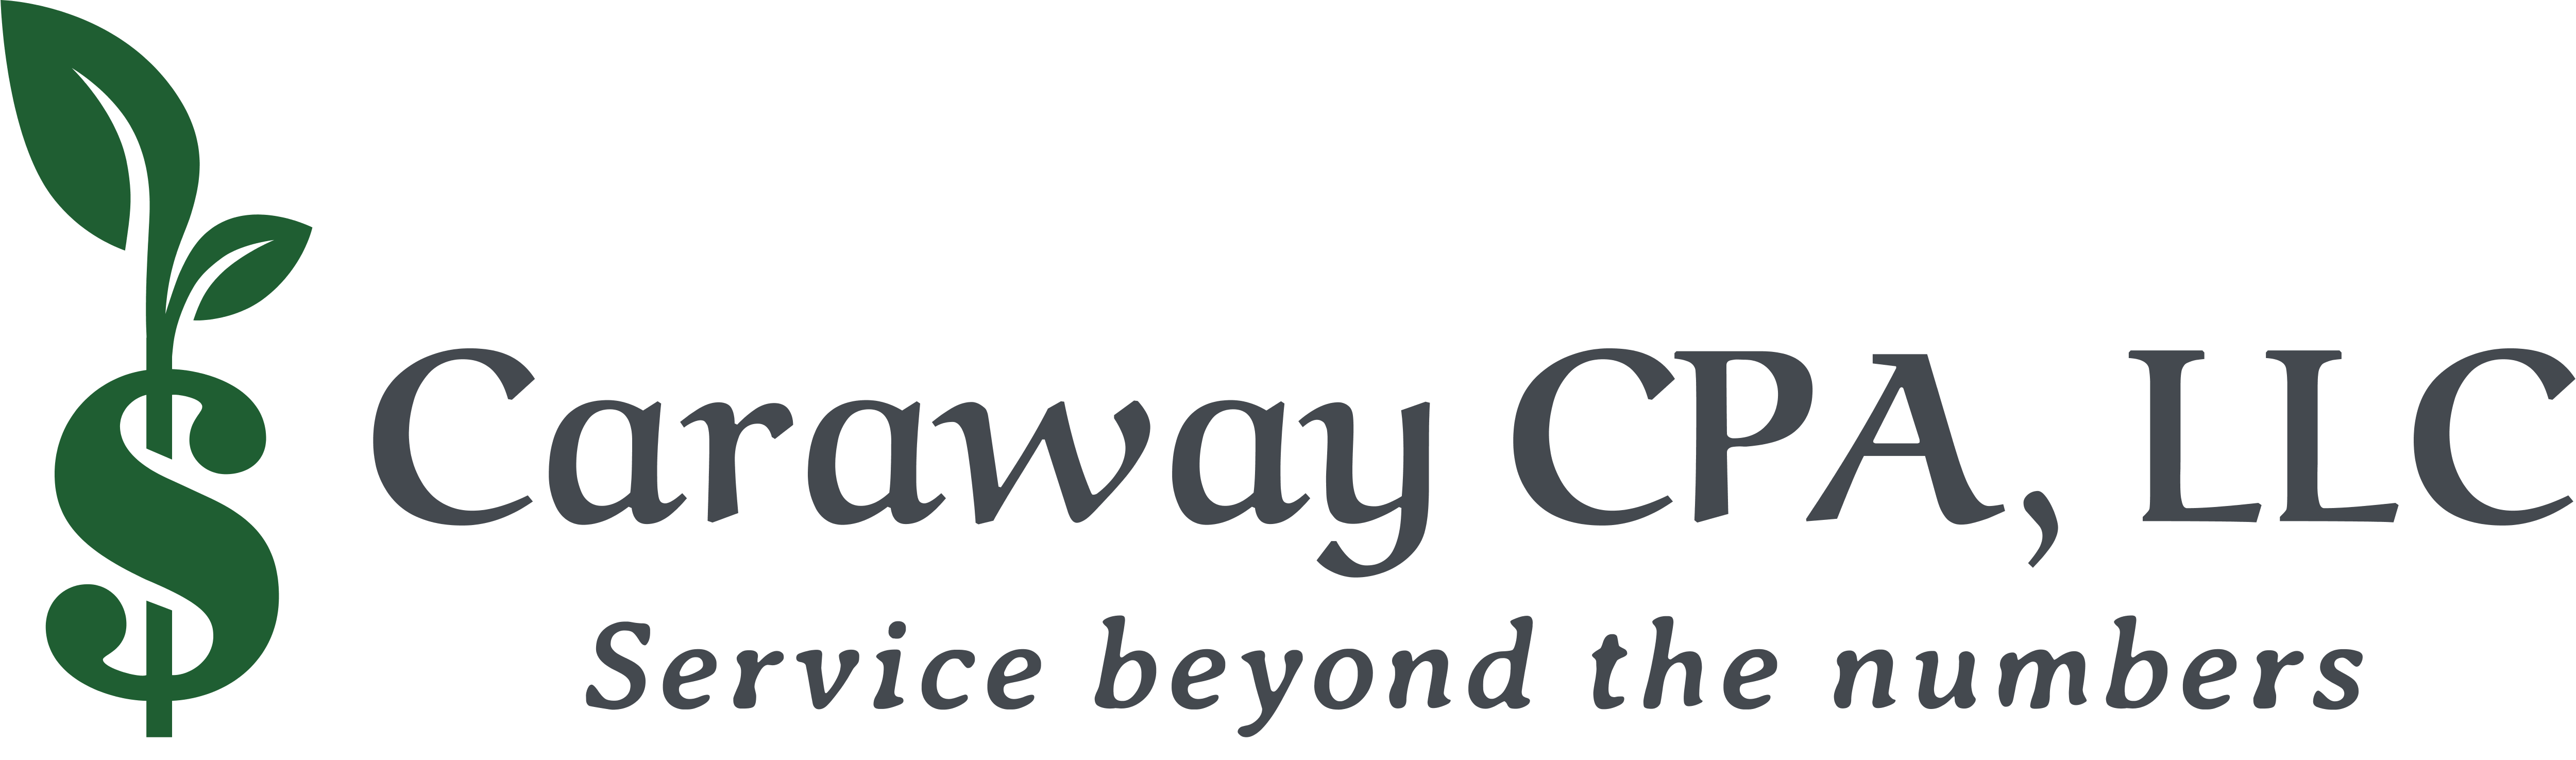 Caraway CPA, LLC